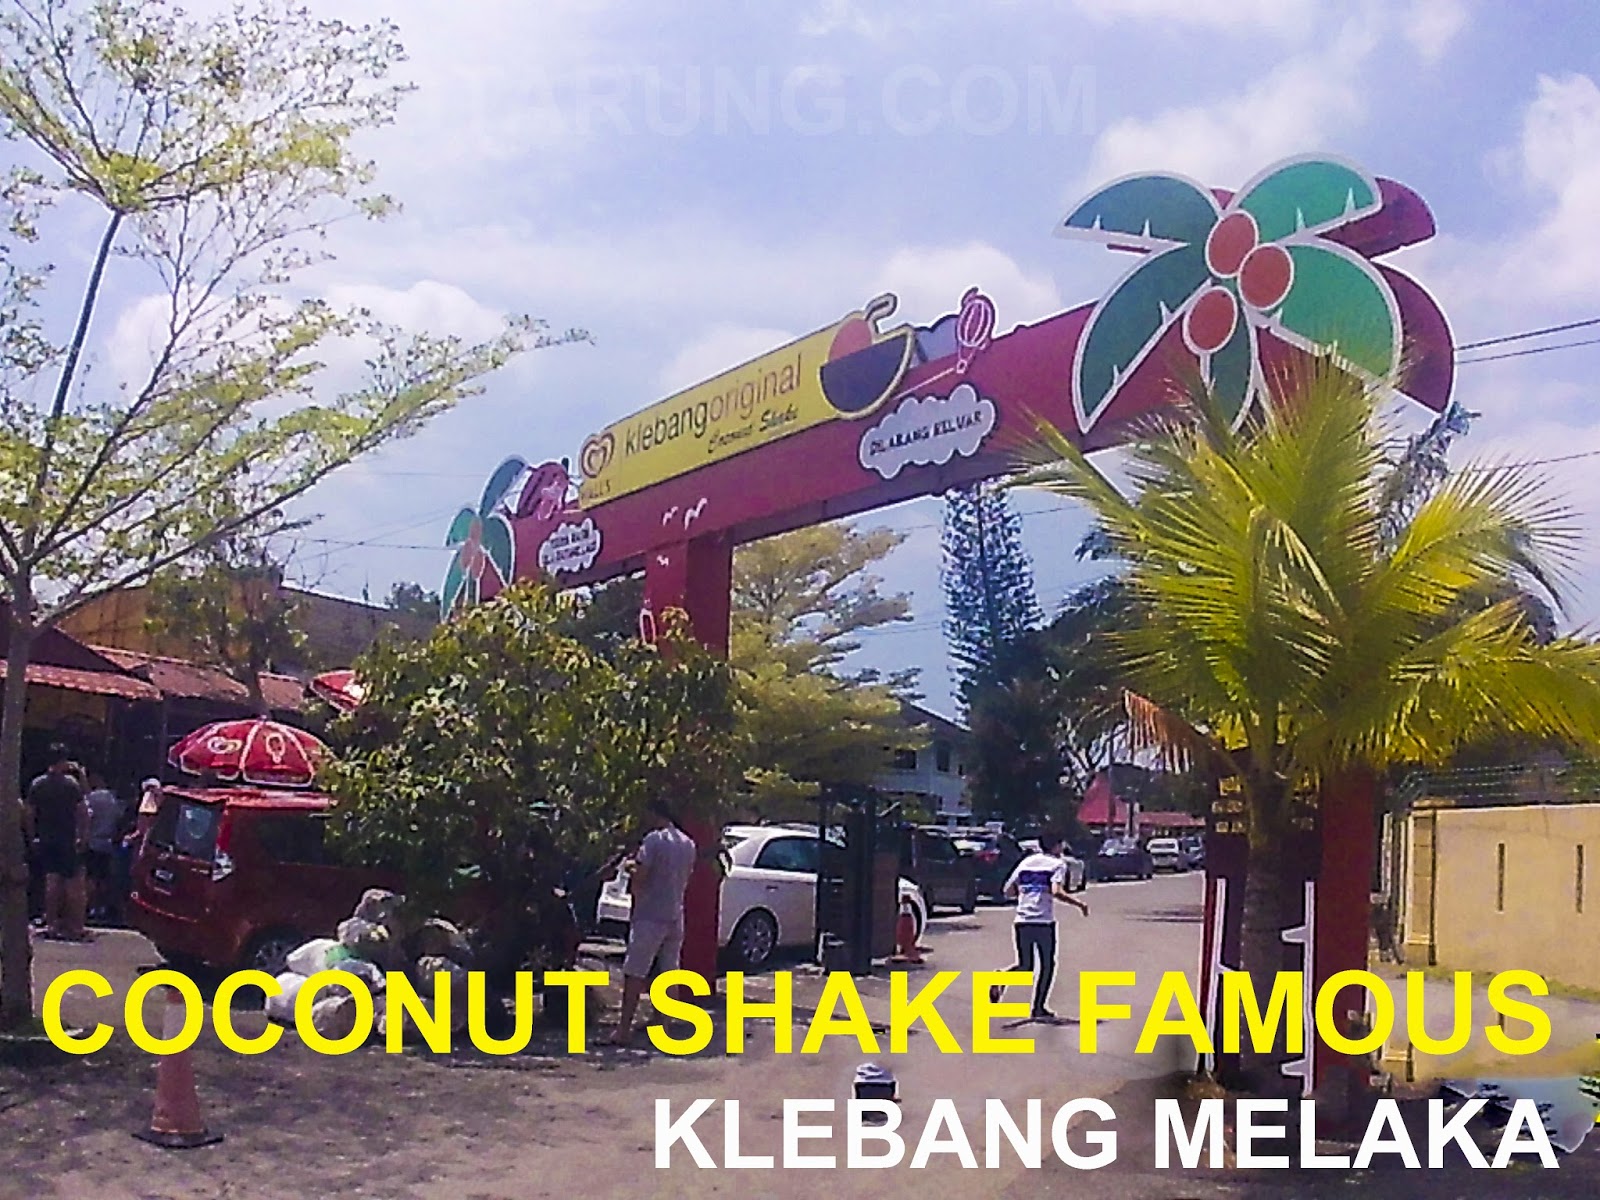 Coconut shake klebang